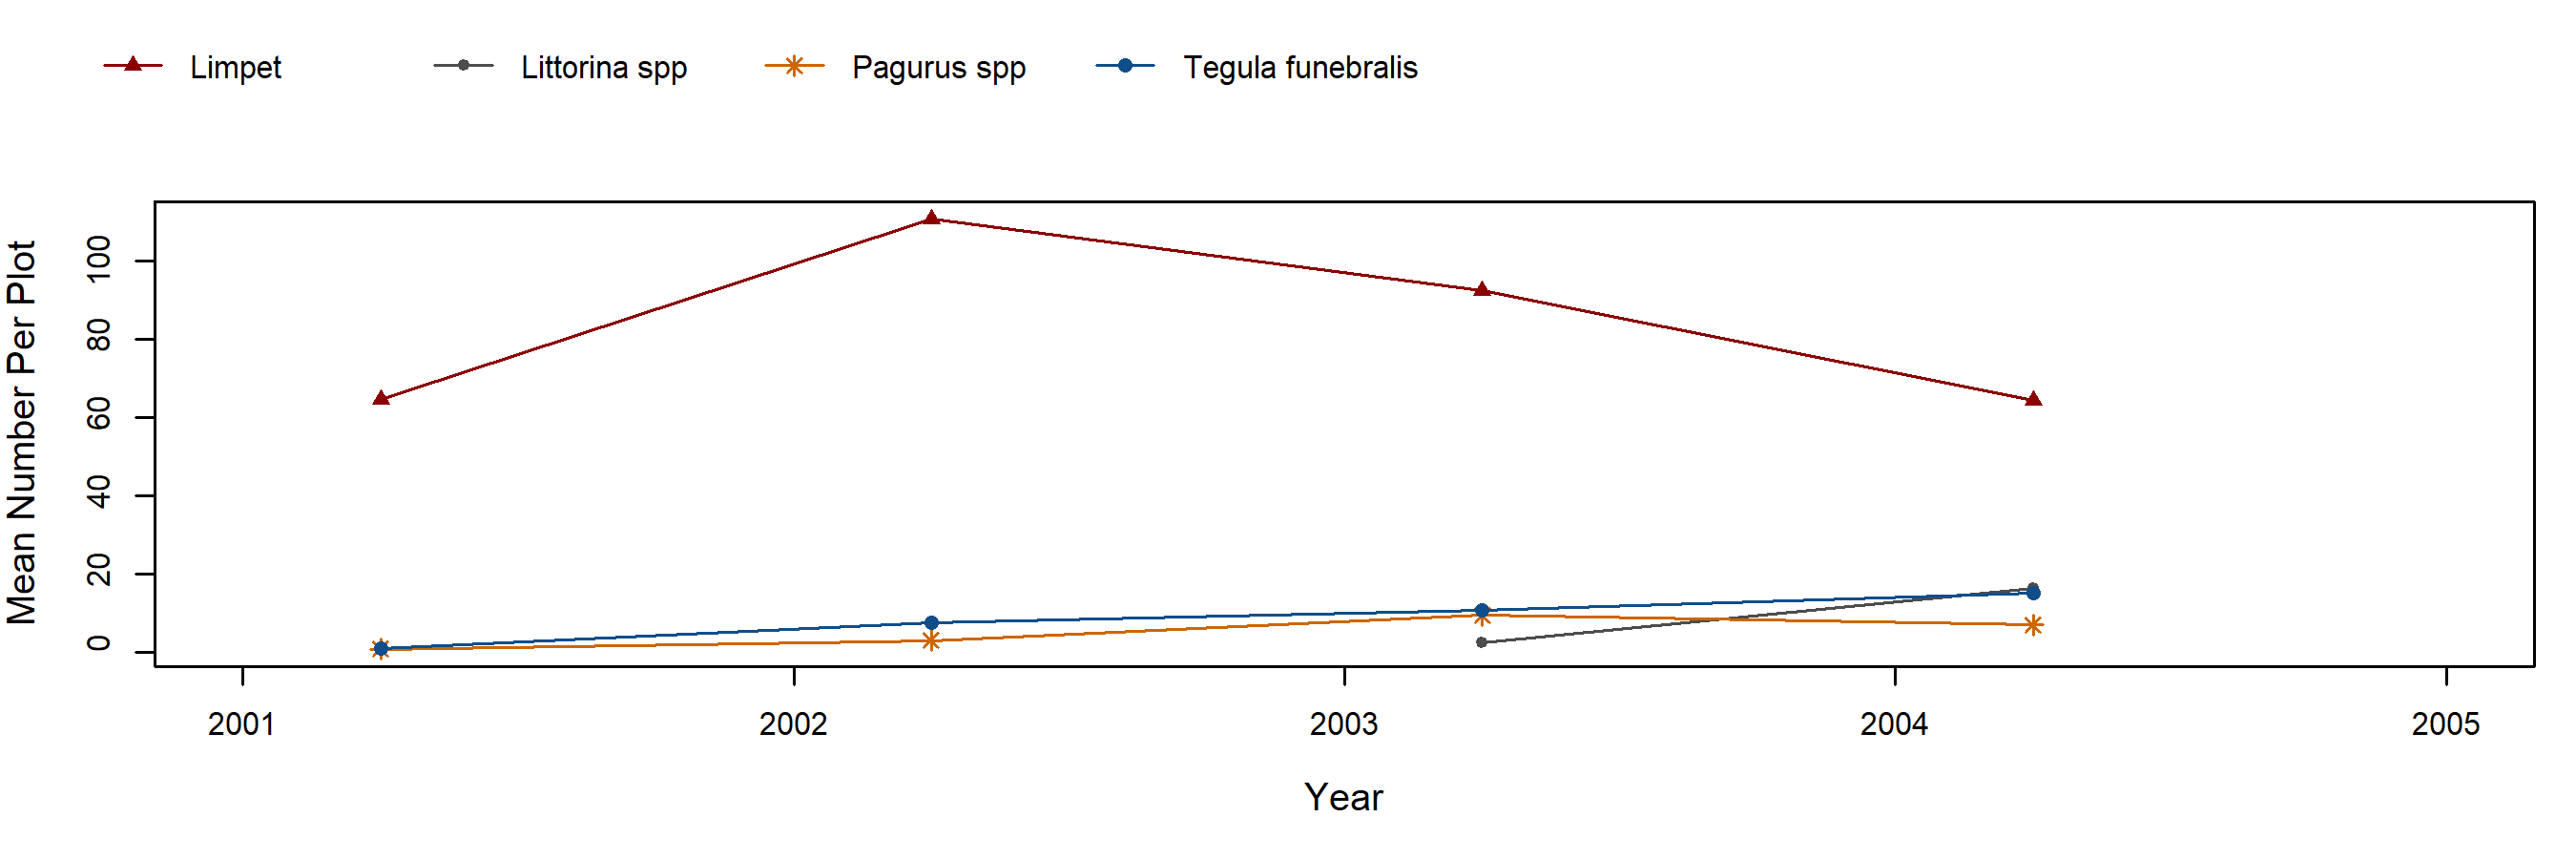 Ecola Neorhodomela trend plot